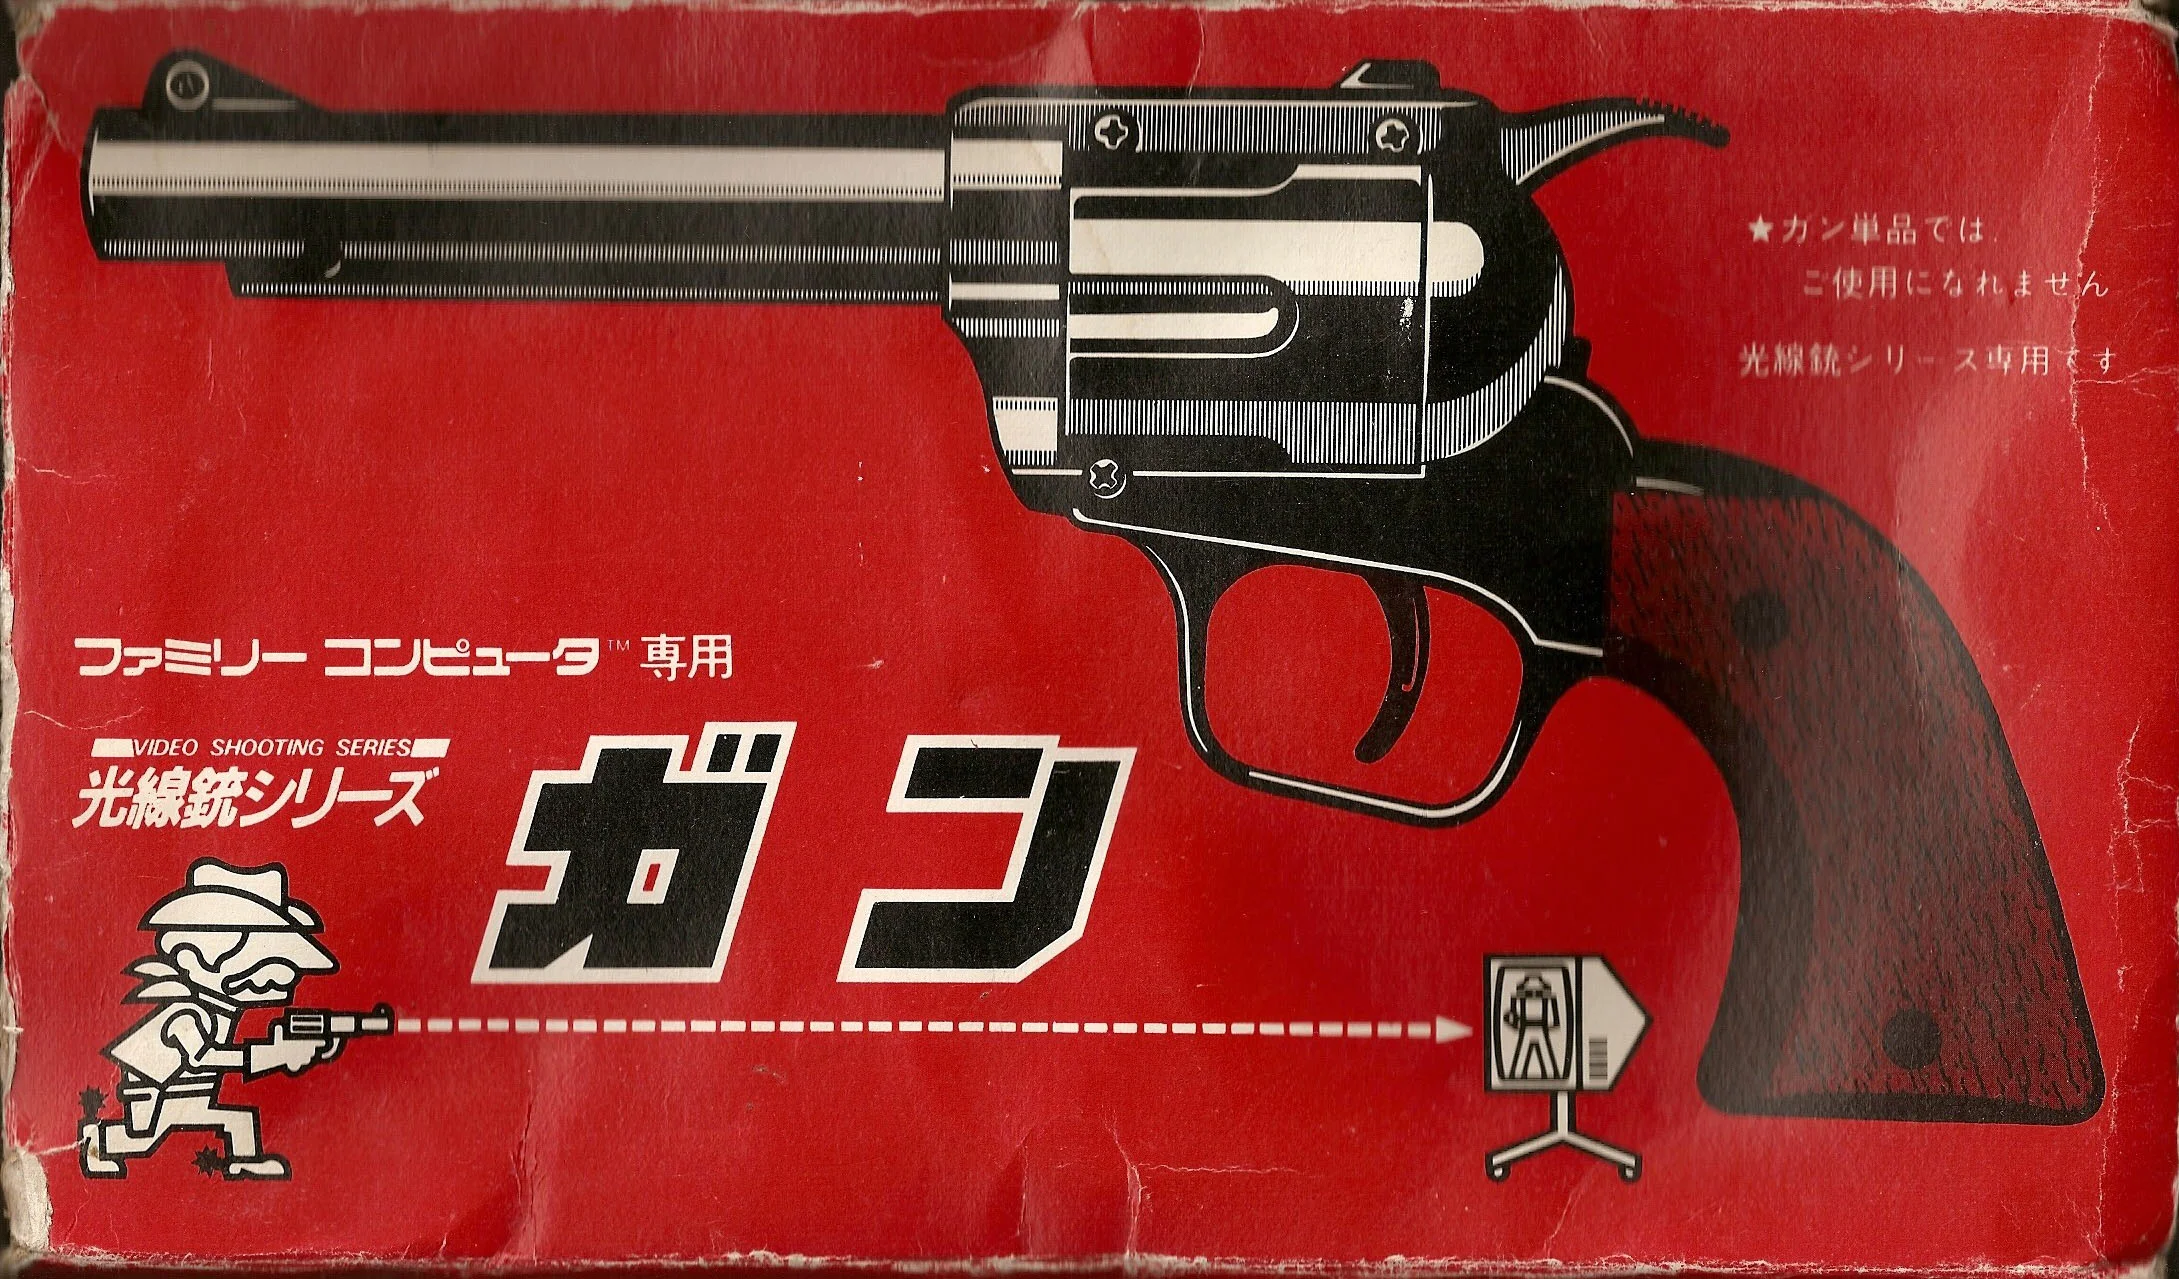  Nintendo Famicom Gun